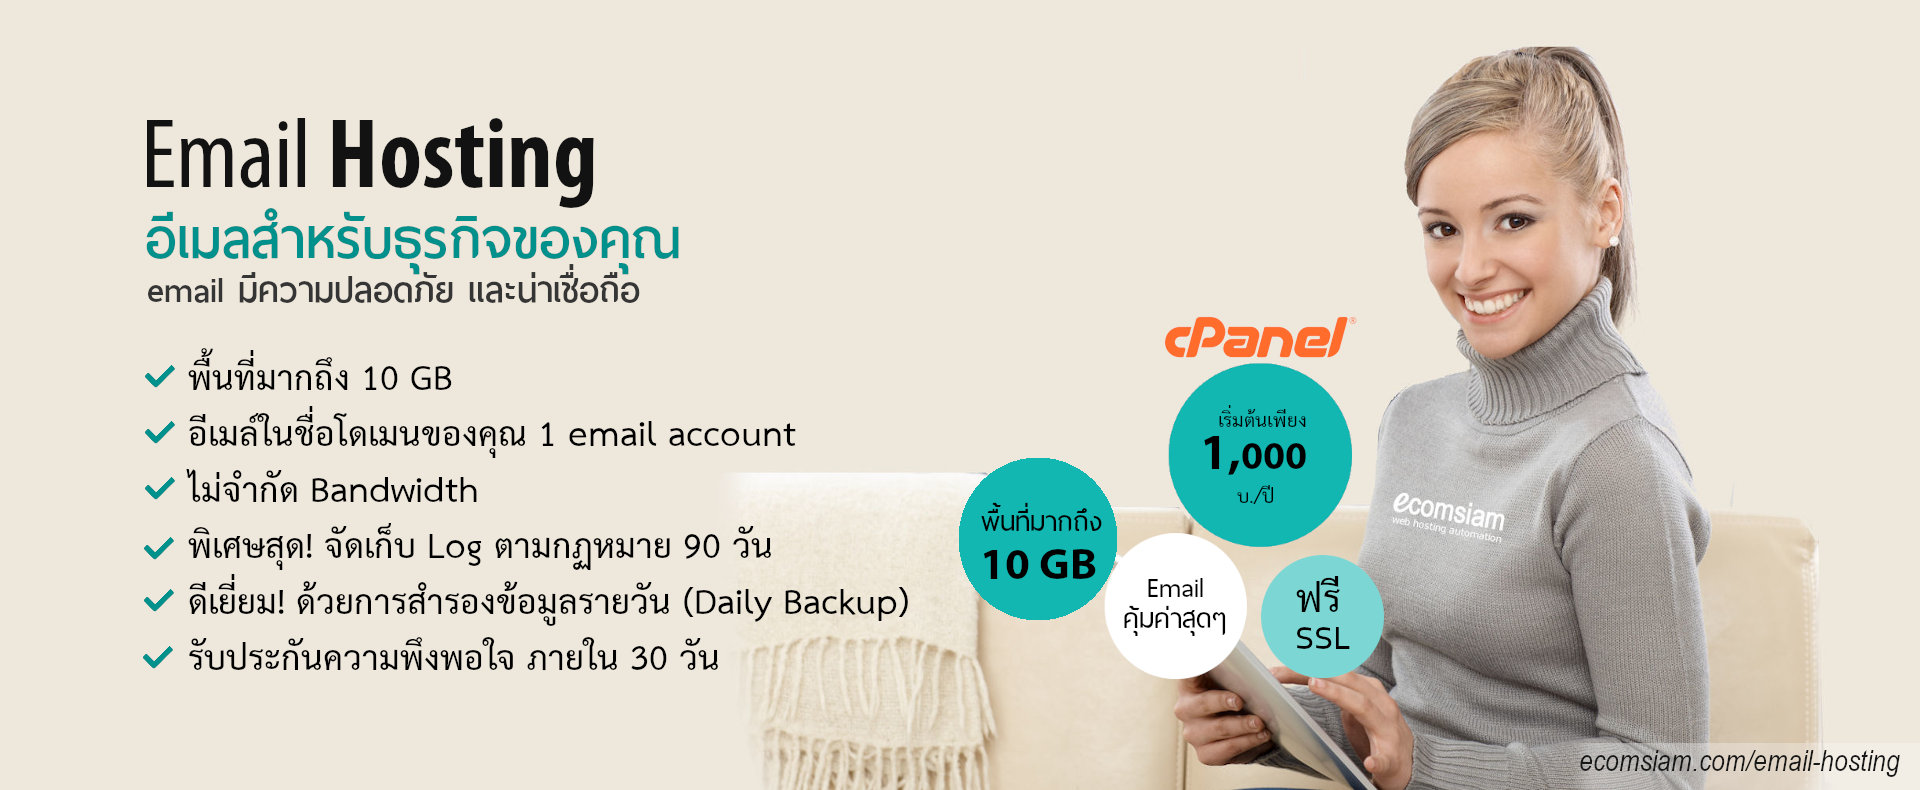 Email hosting thailand ไทย - พื้นที่มากถึง 10 GB/1 email เพียง 1000 บาทต่อปี พร้อมใบรับรอง SSL